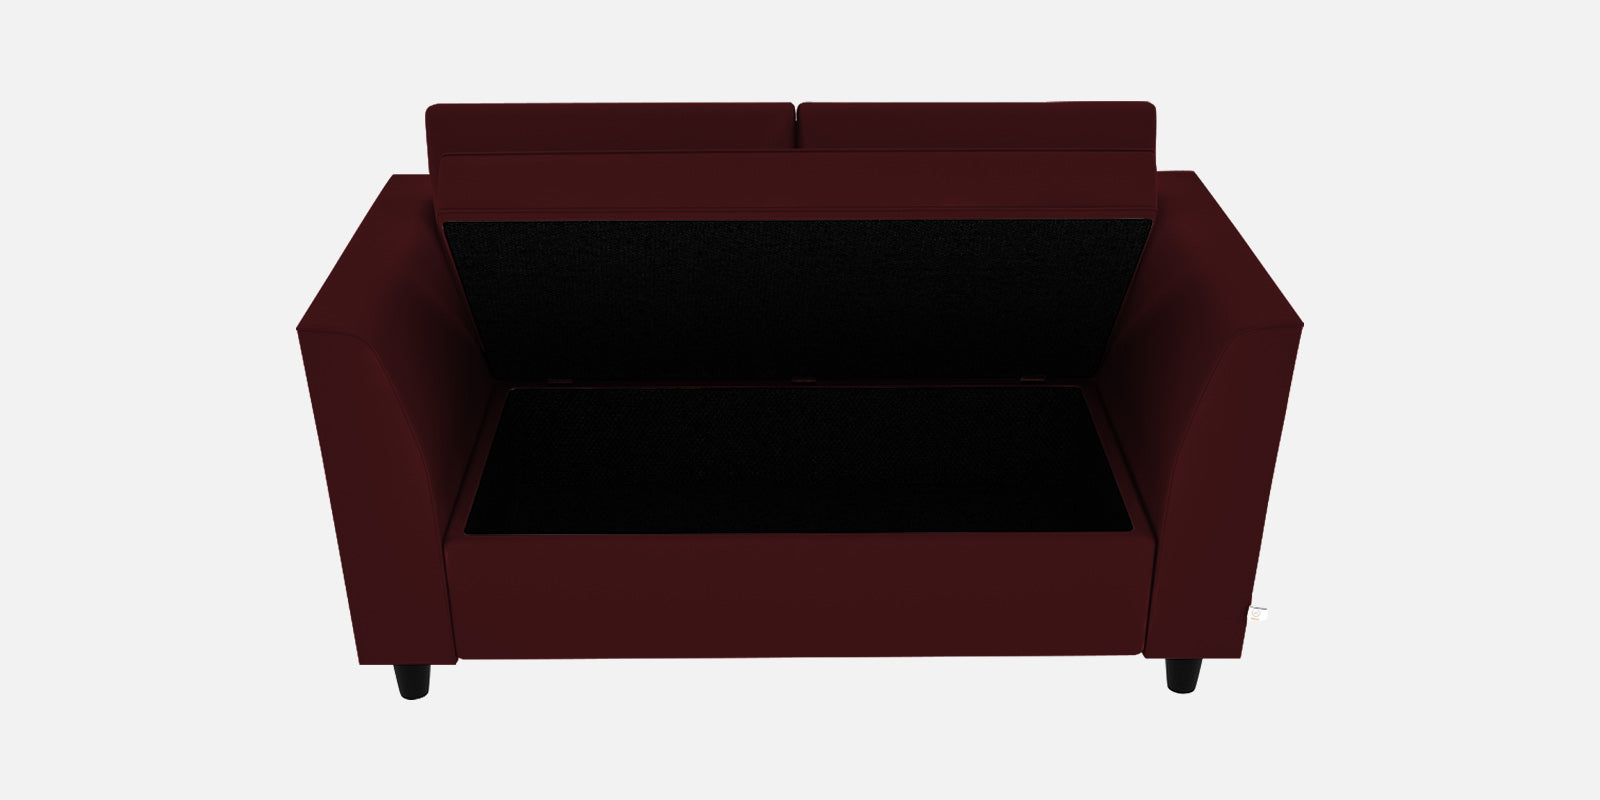 Bristo Velvet 2 Seater Sofa in Dark Maroon Colour With Storage